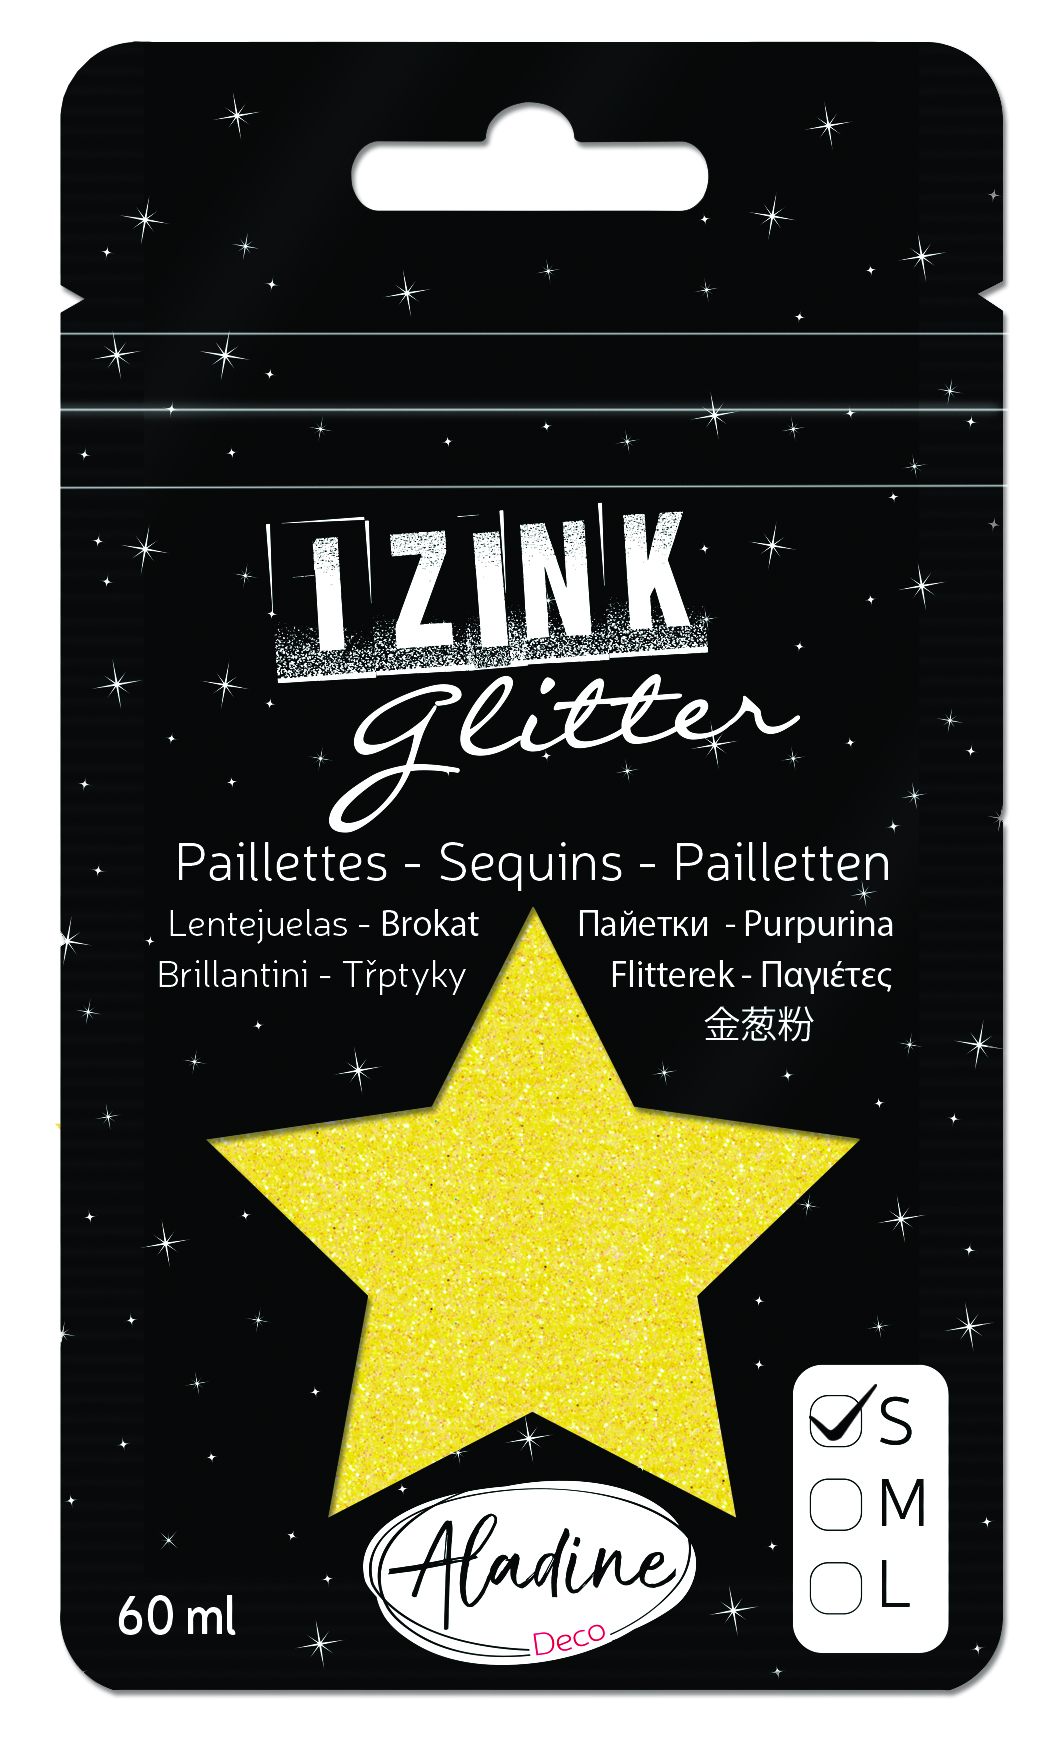 Izink Superfine Glitter - Jaune (Yellow)